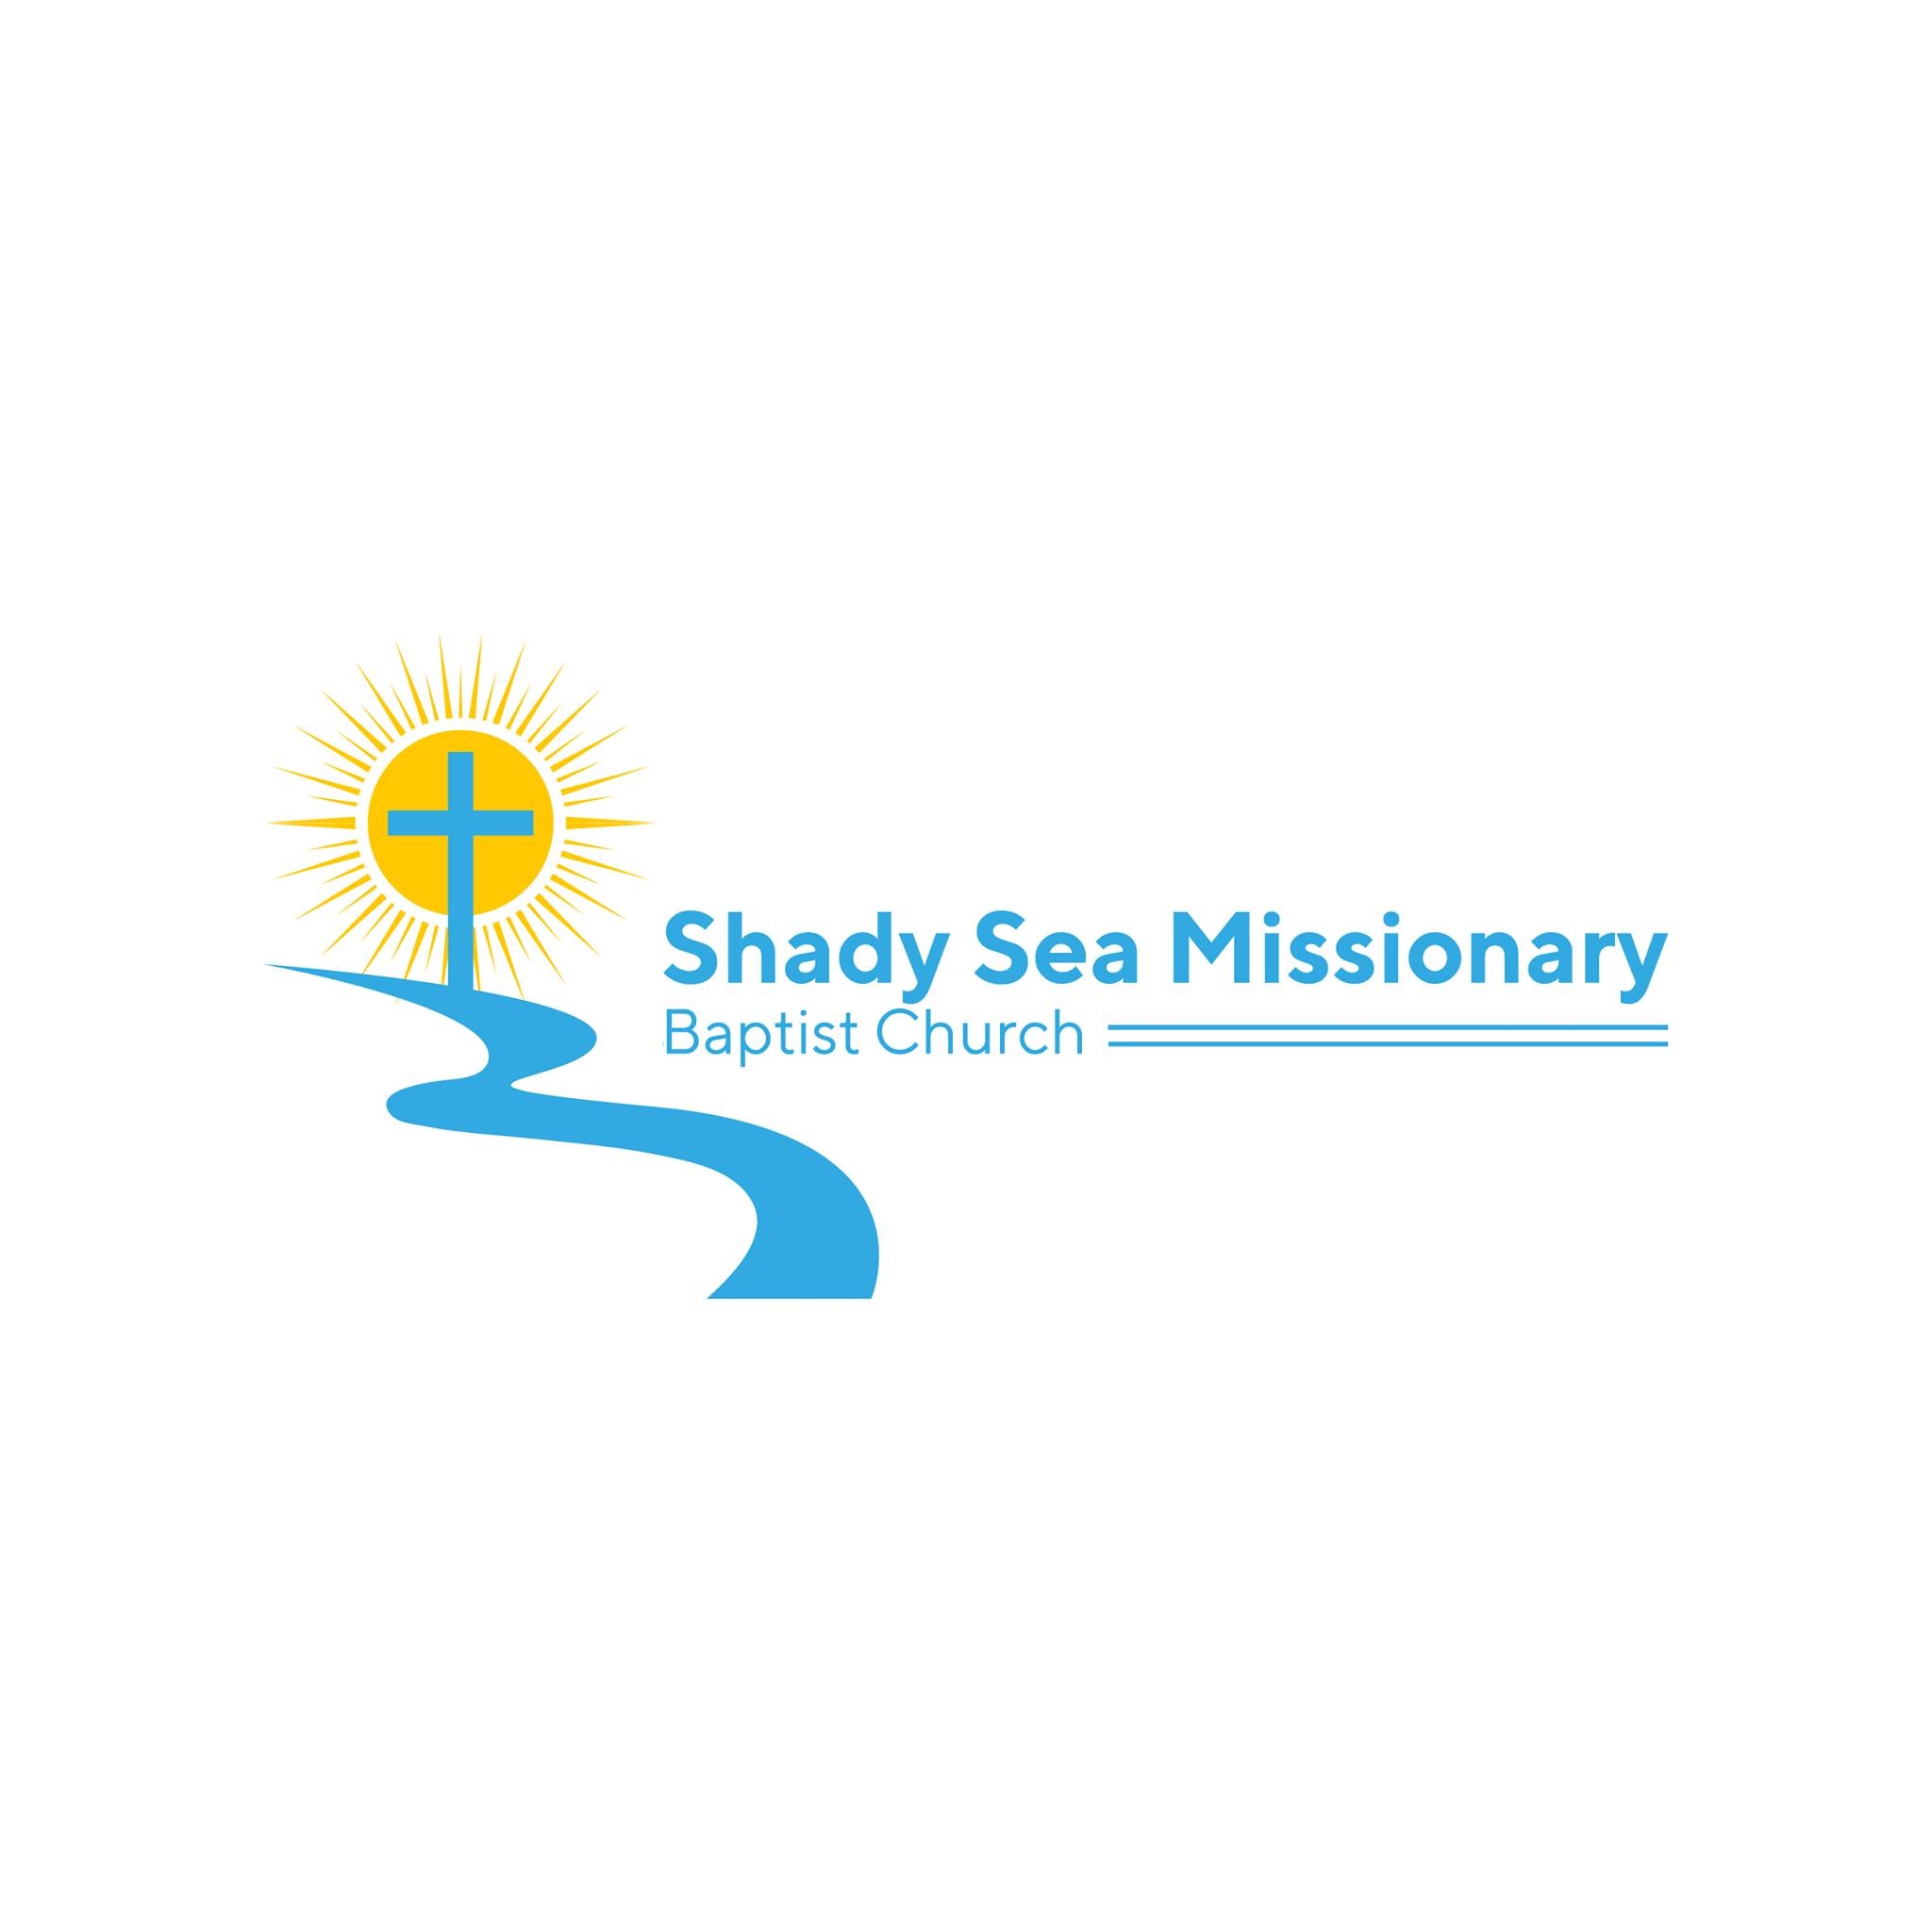 Shady Sea Missionary Baptist Church